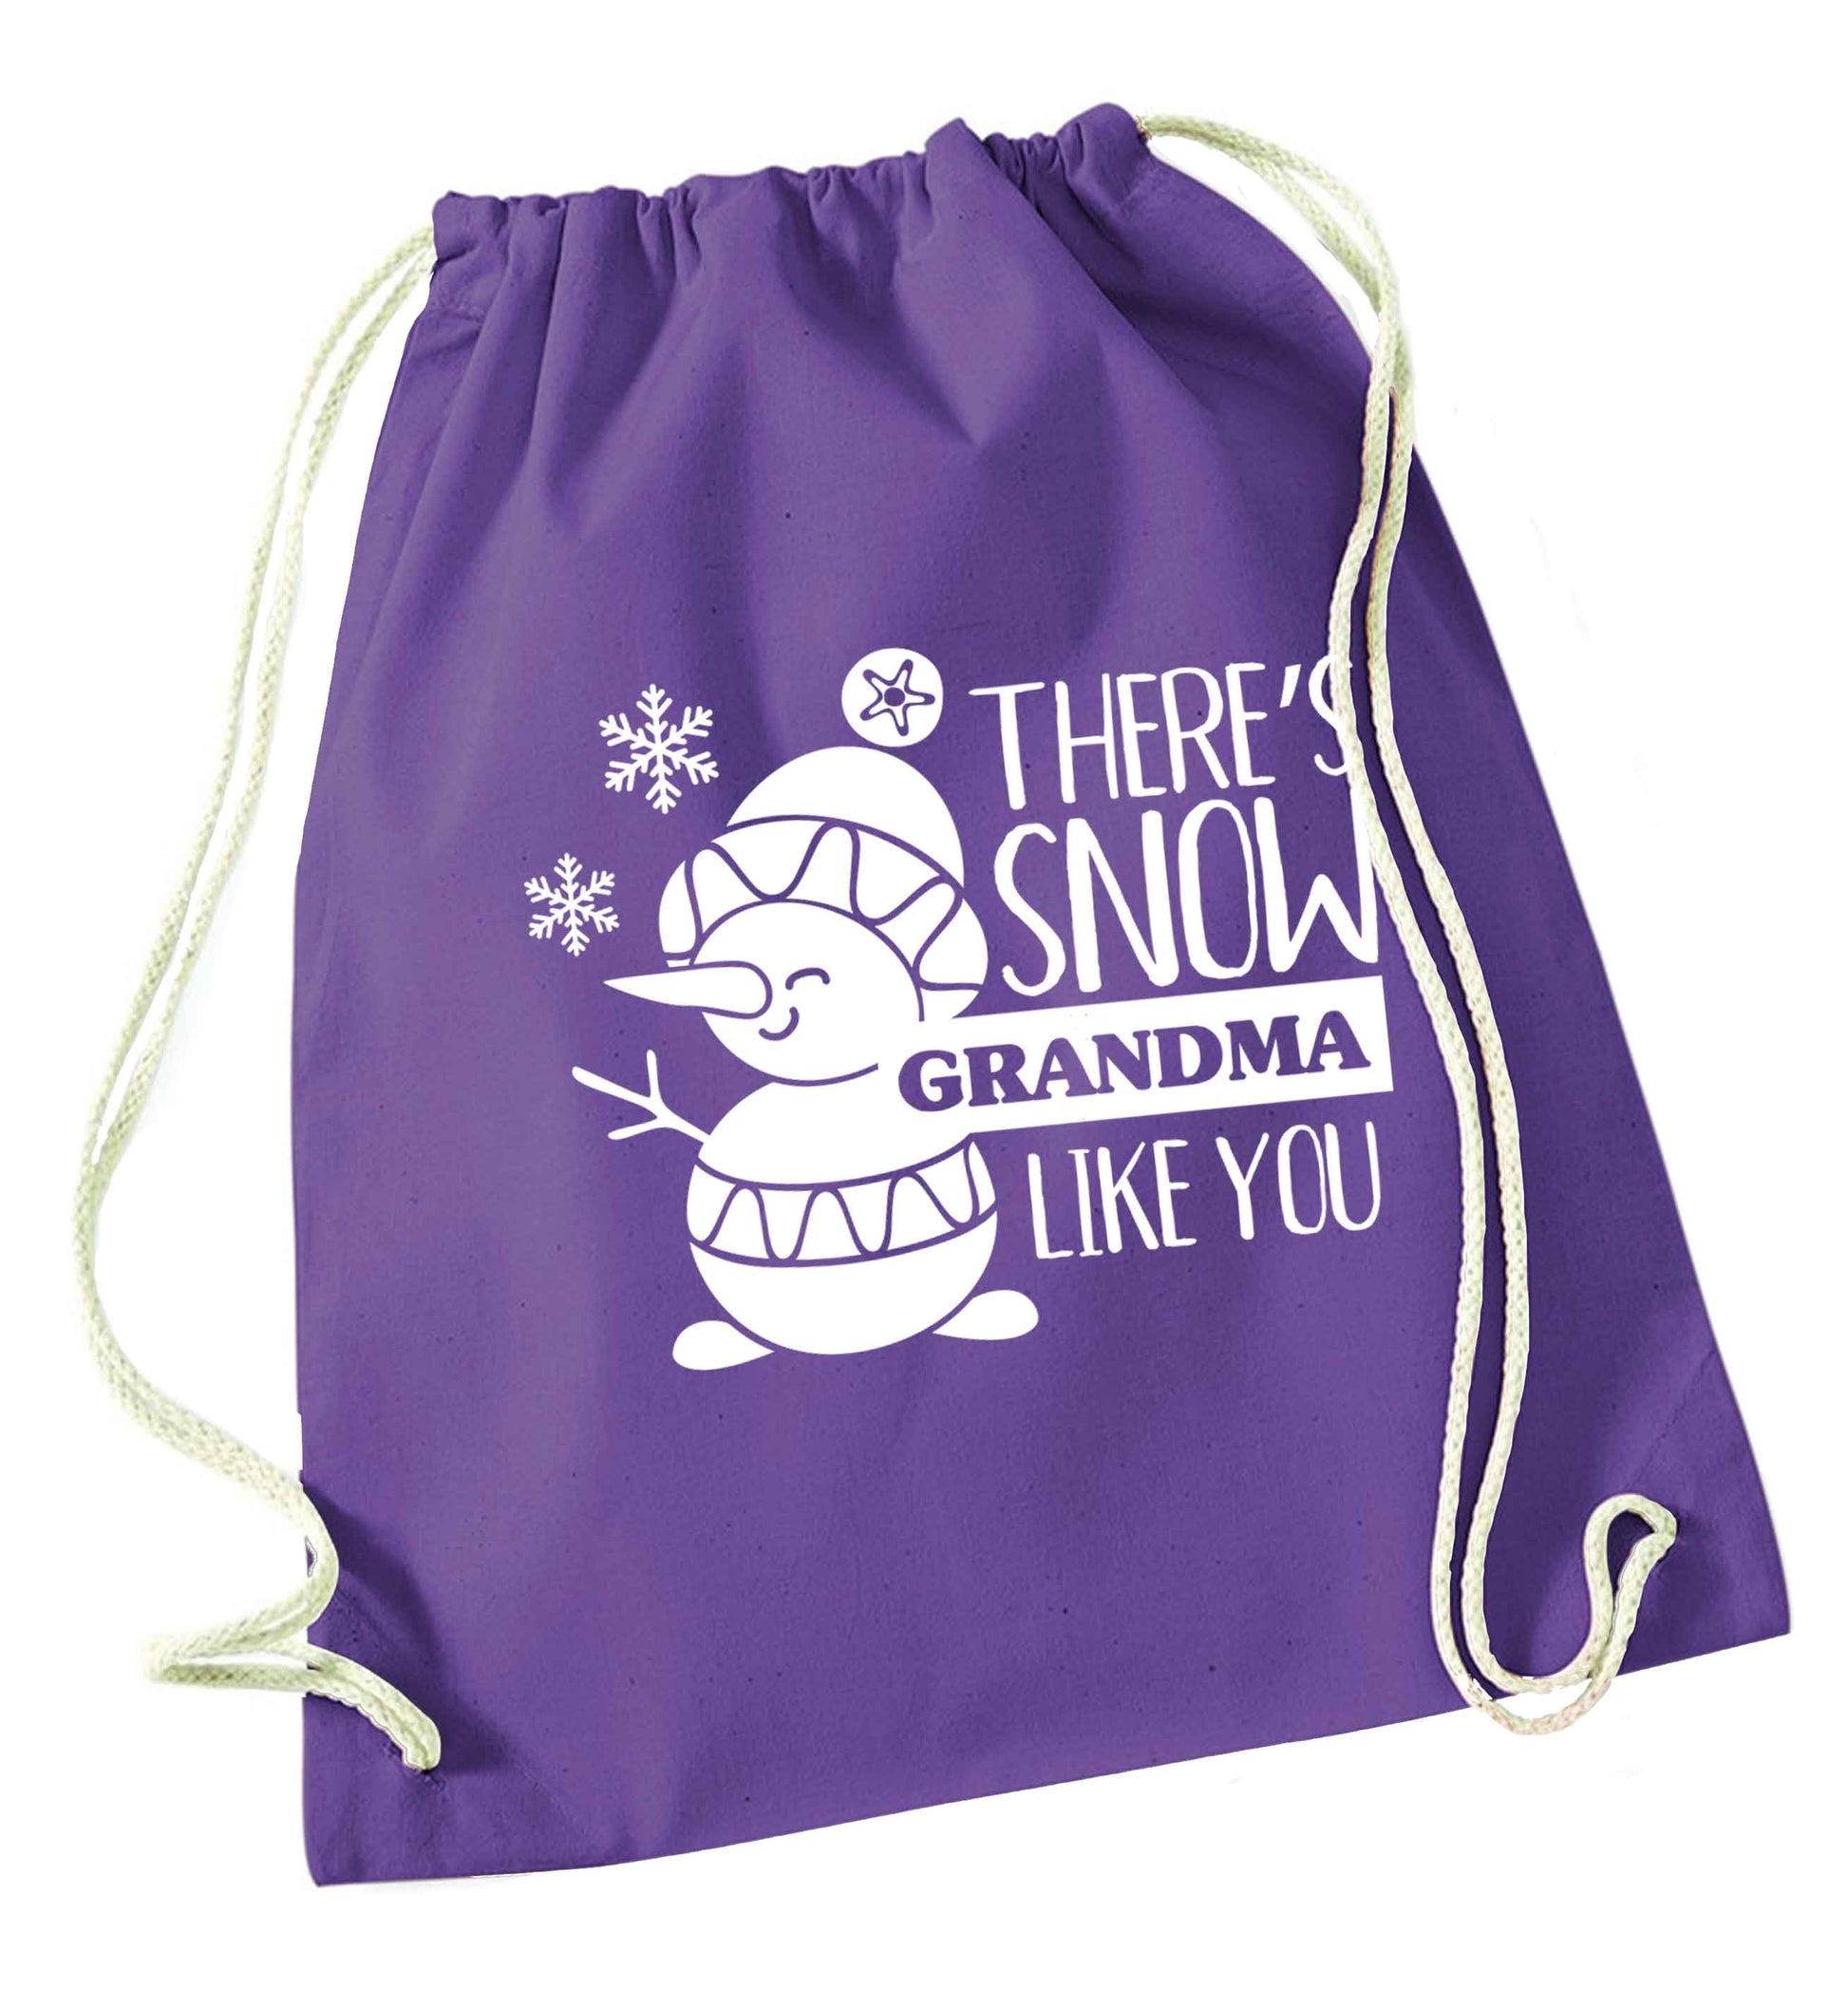 There's snow grandma like you purple drawstring bag